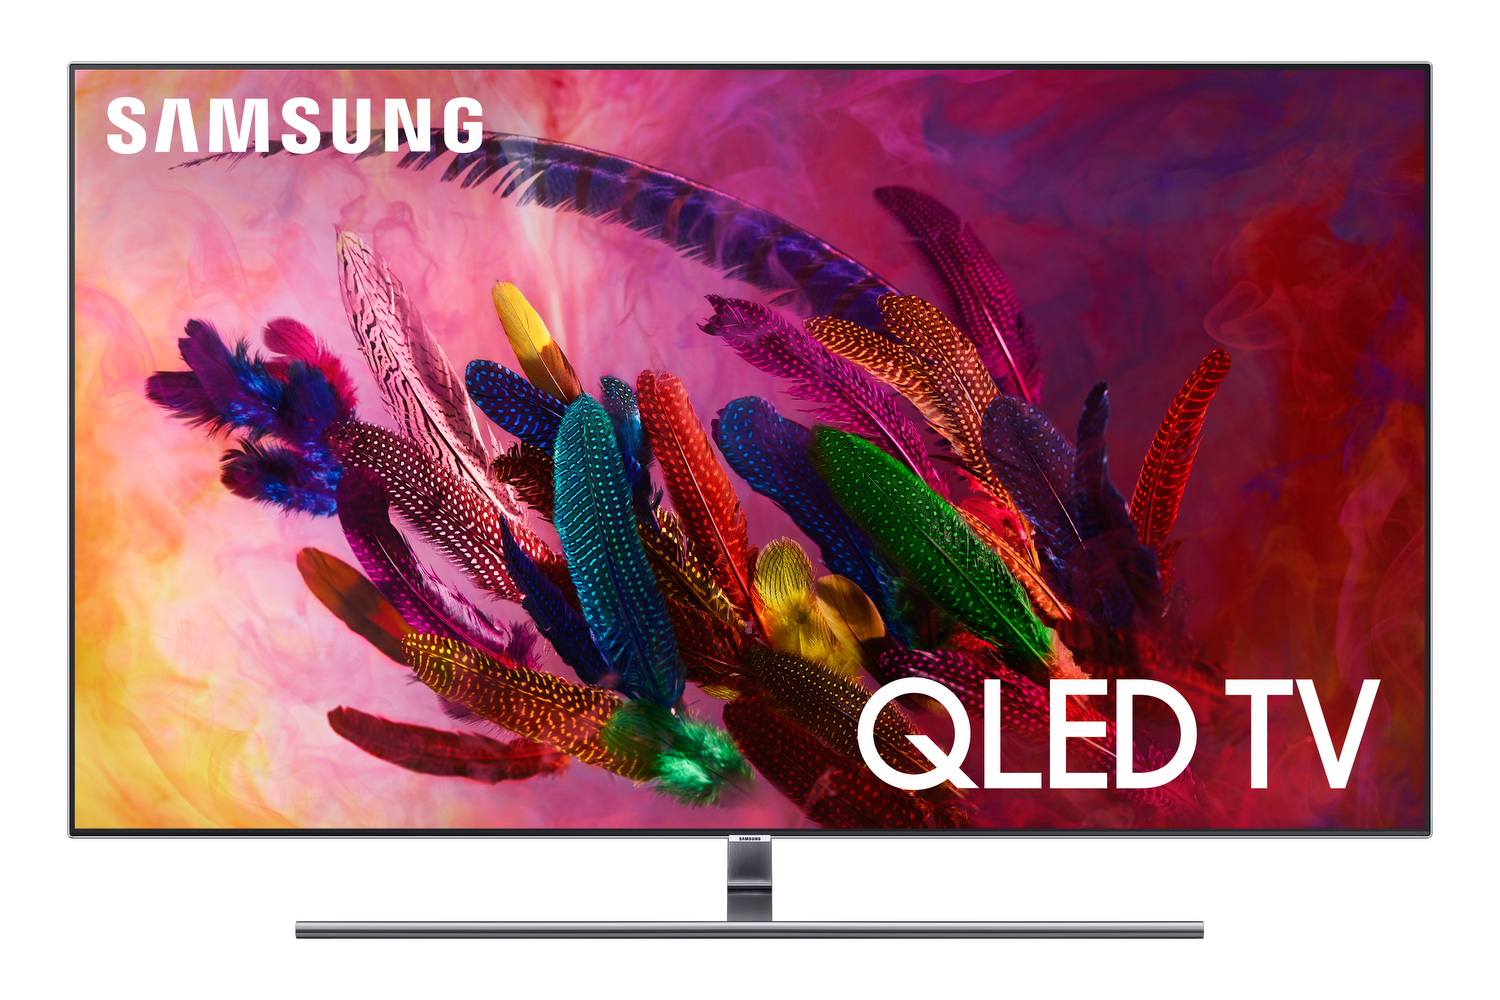 Samsung 2018 QLED TV Lineup | Q7FN Model